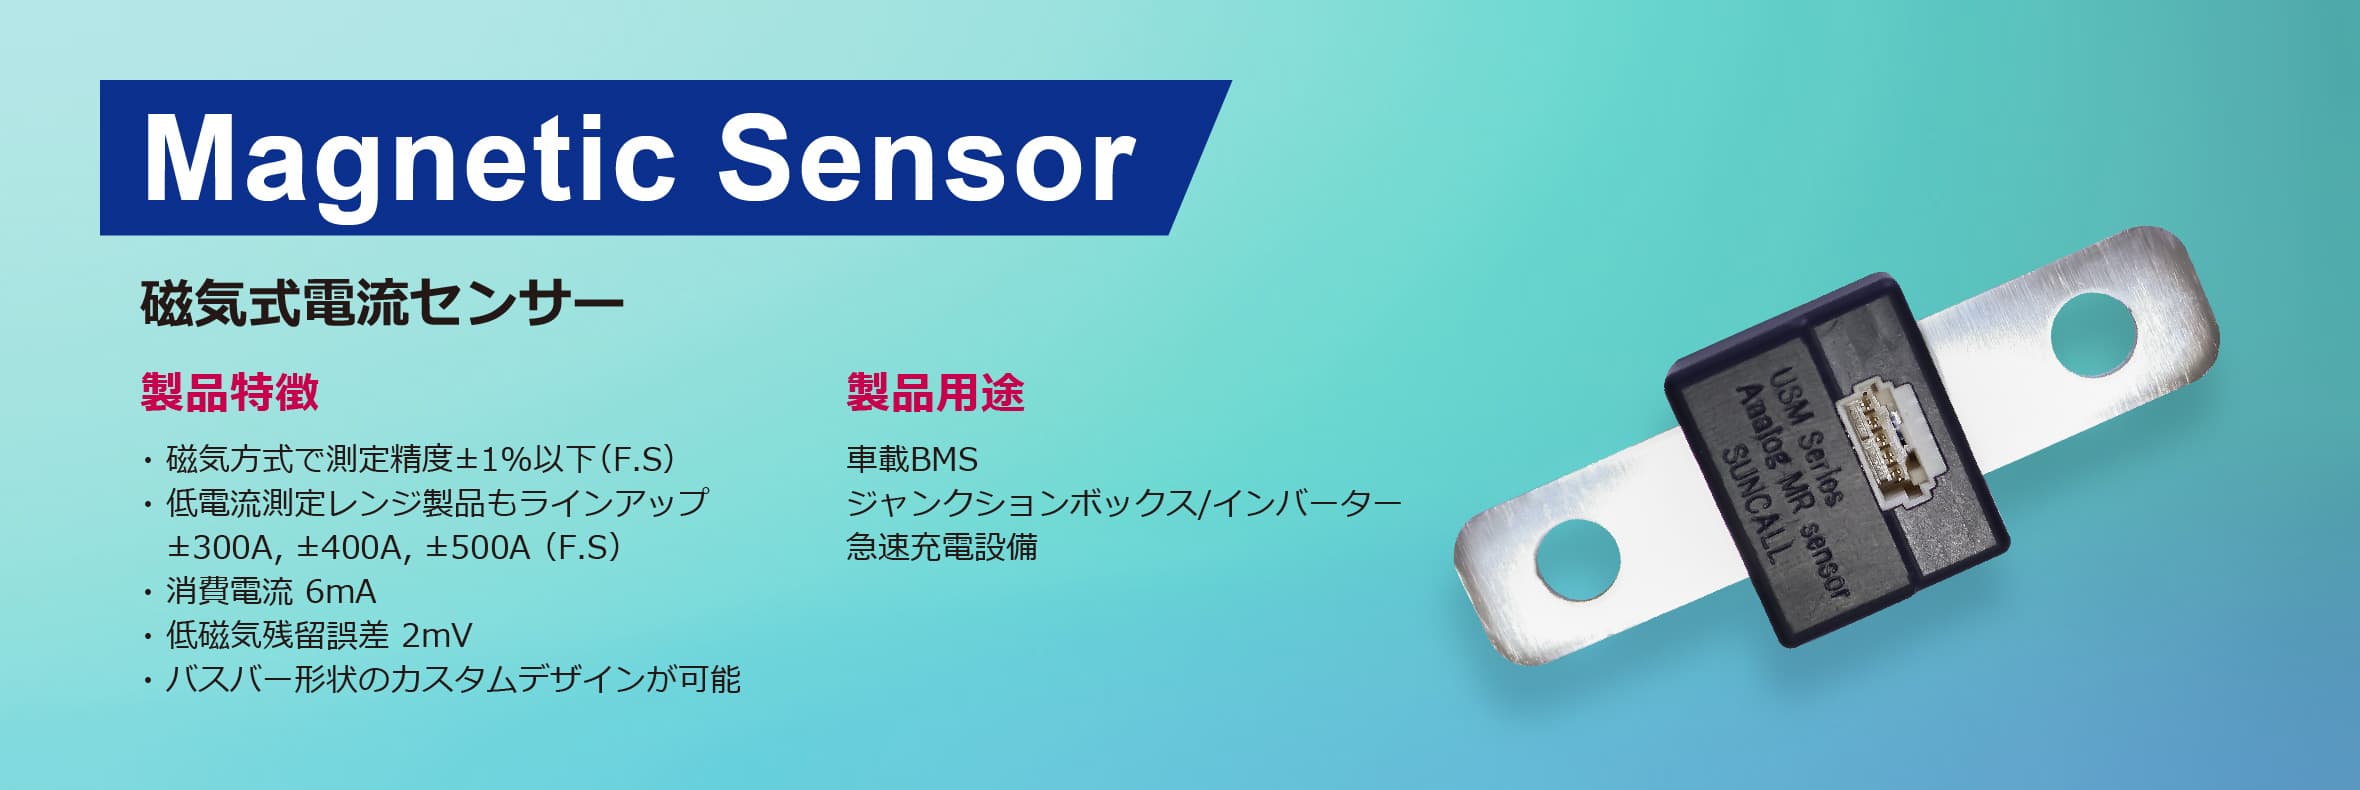 Magnetic Sensor Series 非接触電流センサー